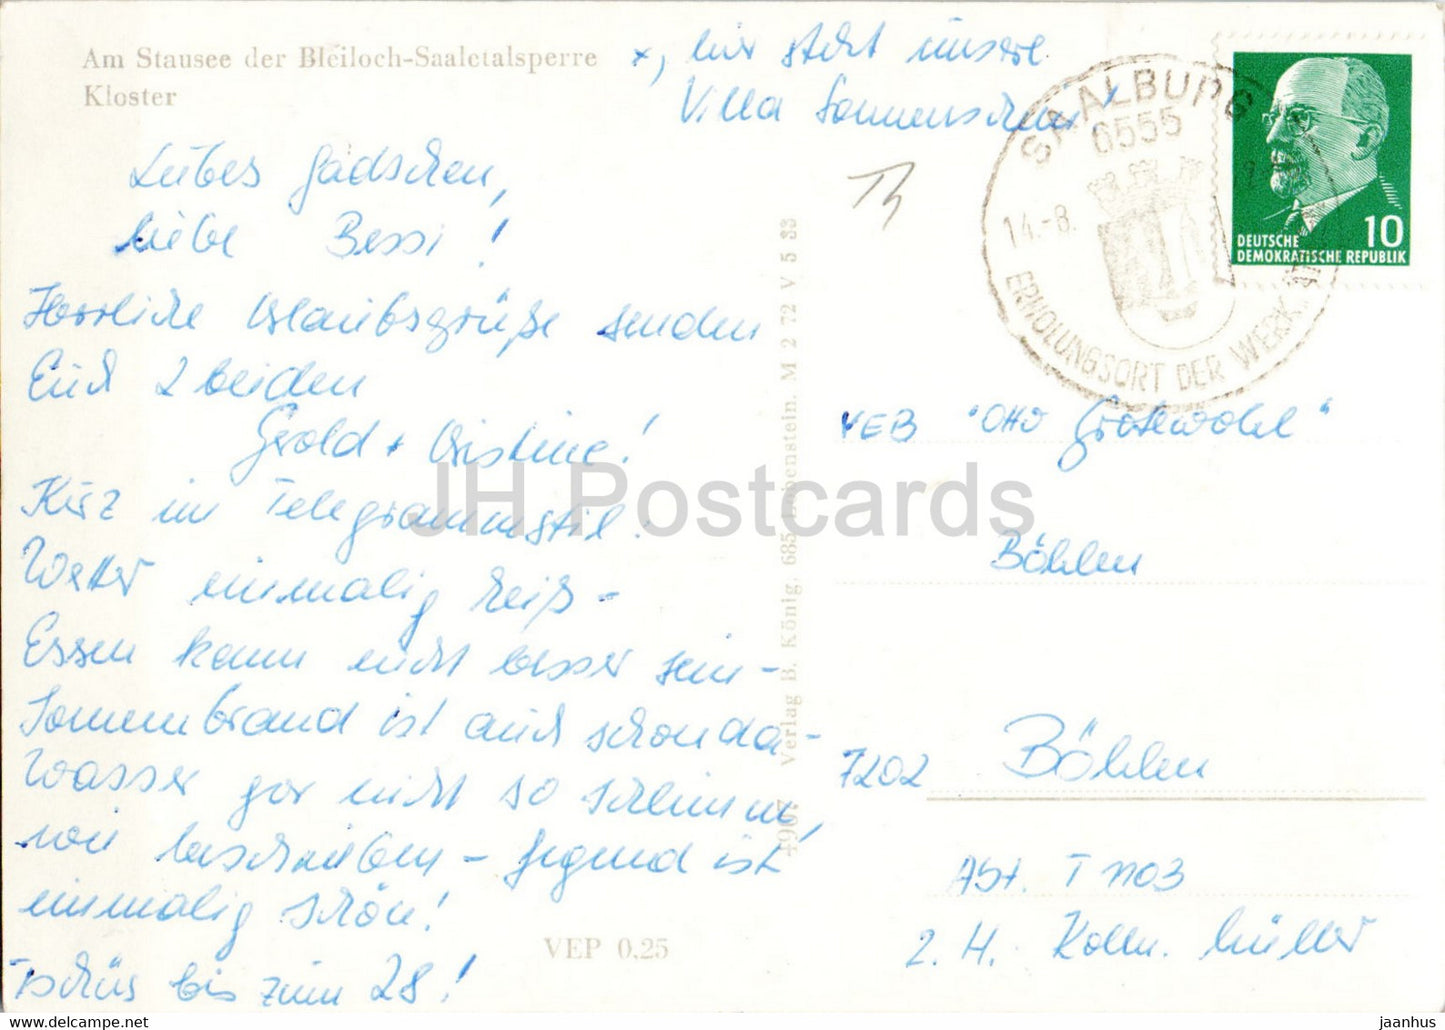 Am Stausee der Bleiloch Saaletalsperre - Kloster - old postcard - Germany DDR - used